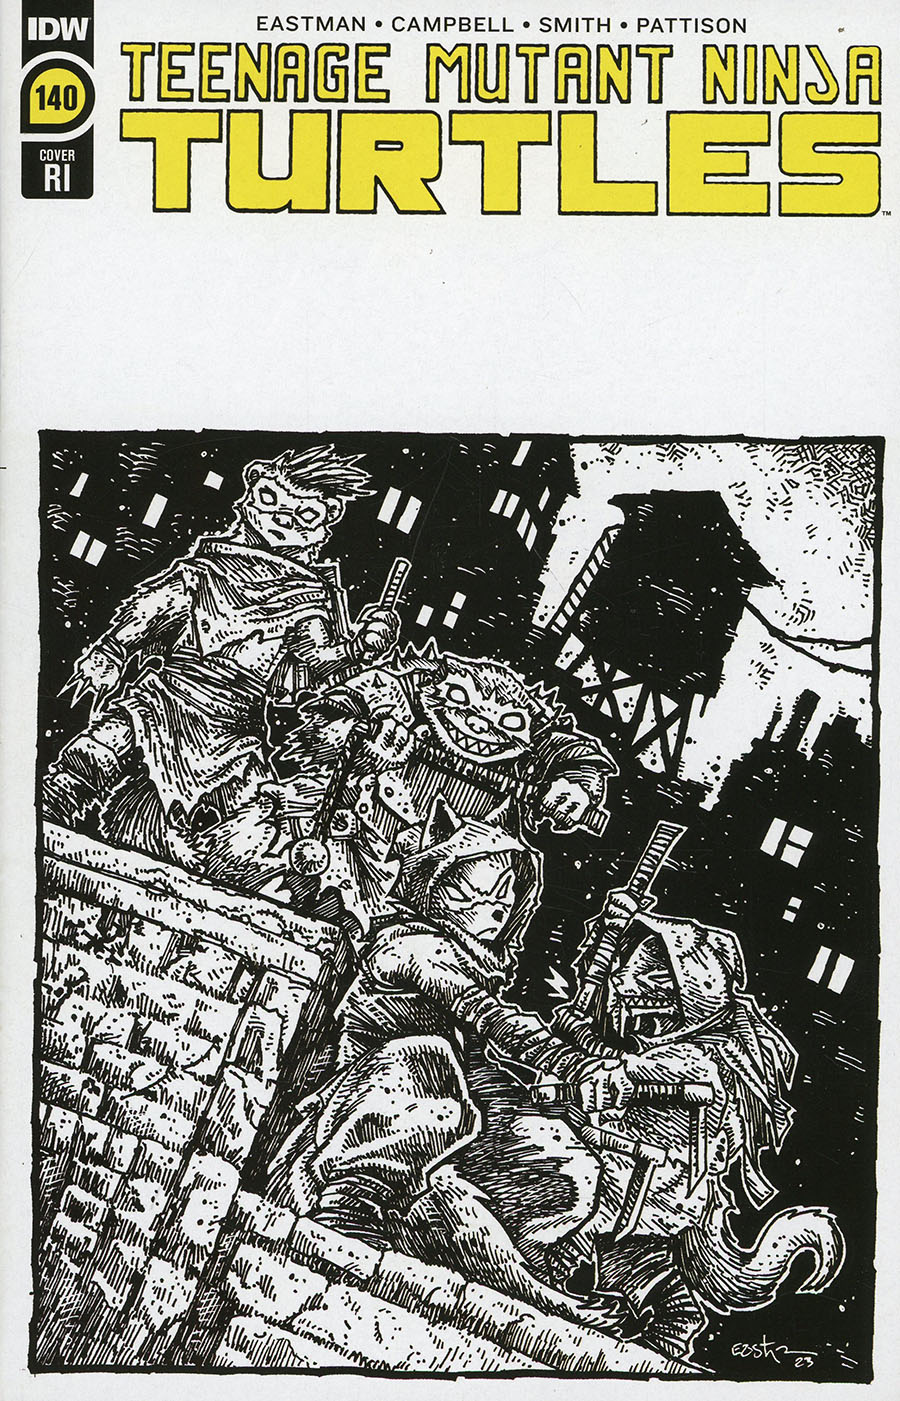 Teenage Mutant Ninja Turtles Vol 5 #140 Cover E Incentive Kevin Eastman Black & White Cover